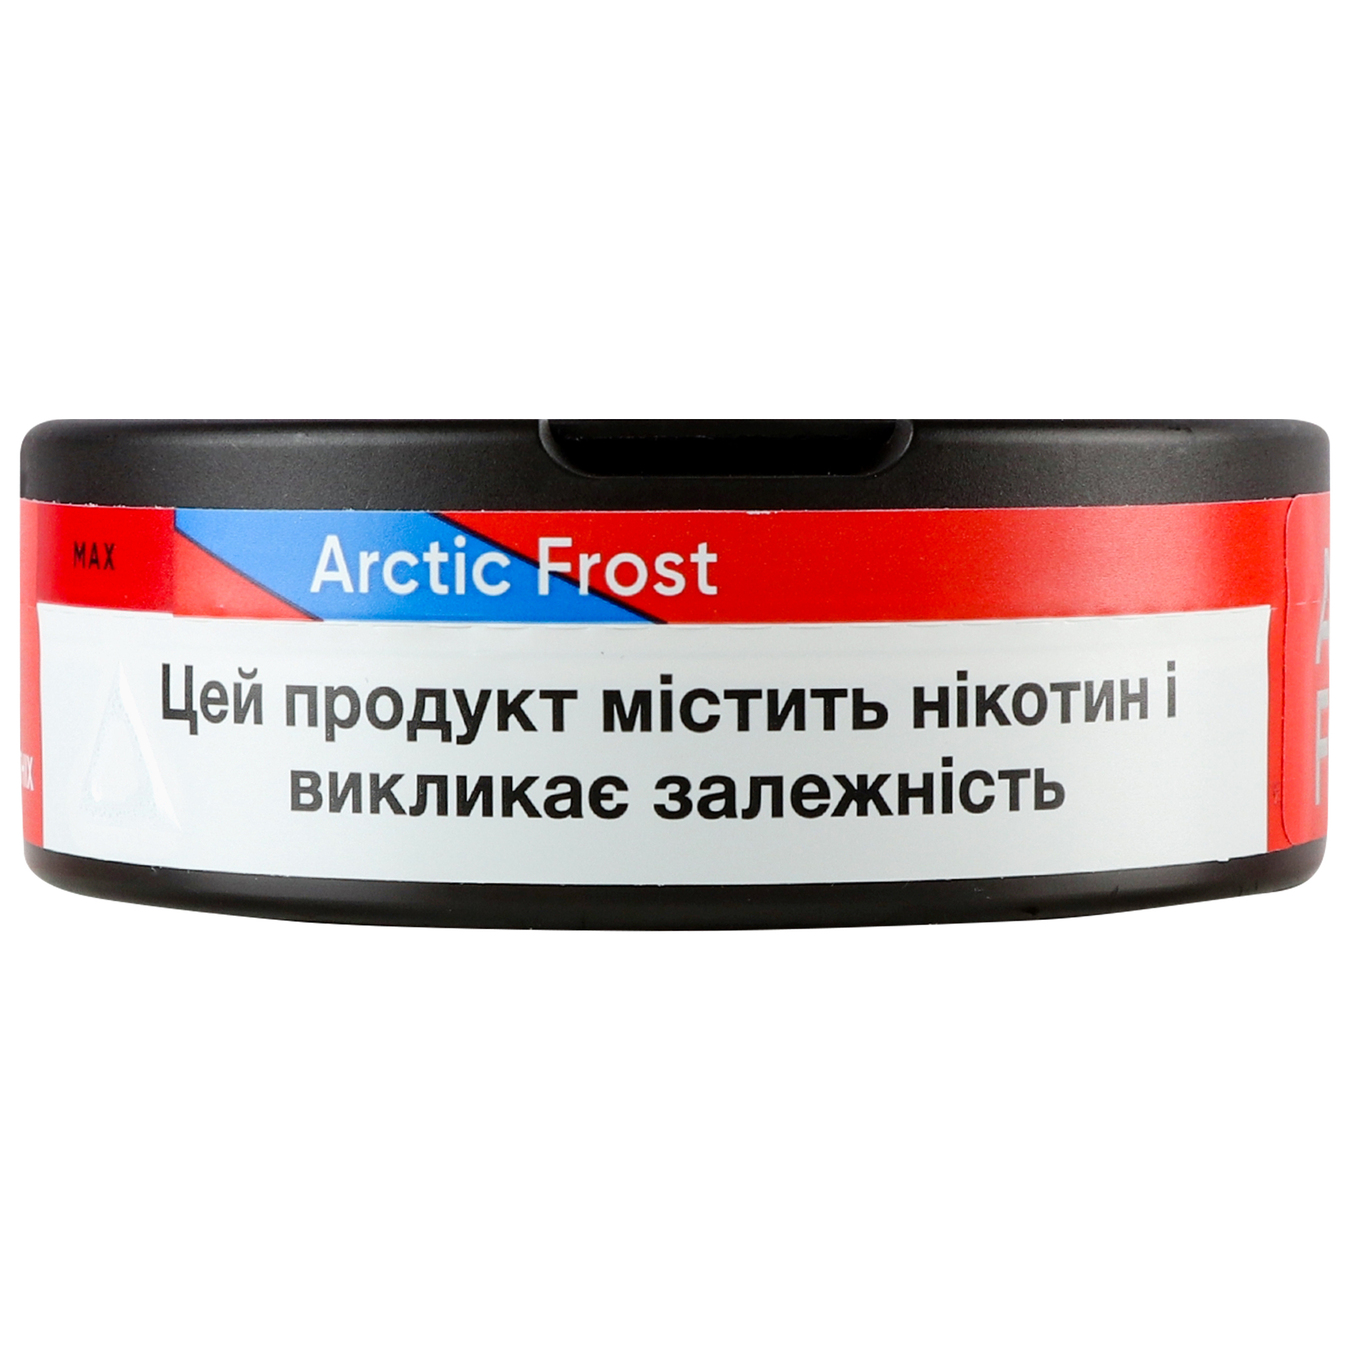 Подушечки VELO Arctic Frost Max никотиновые 18шт (цена указана без акциза) 4